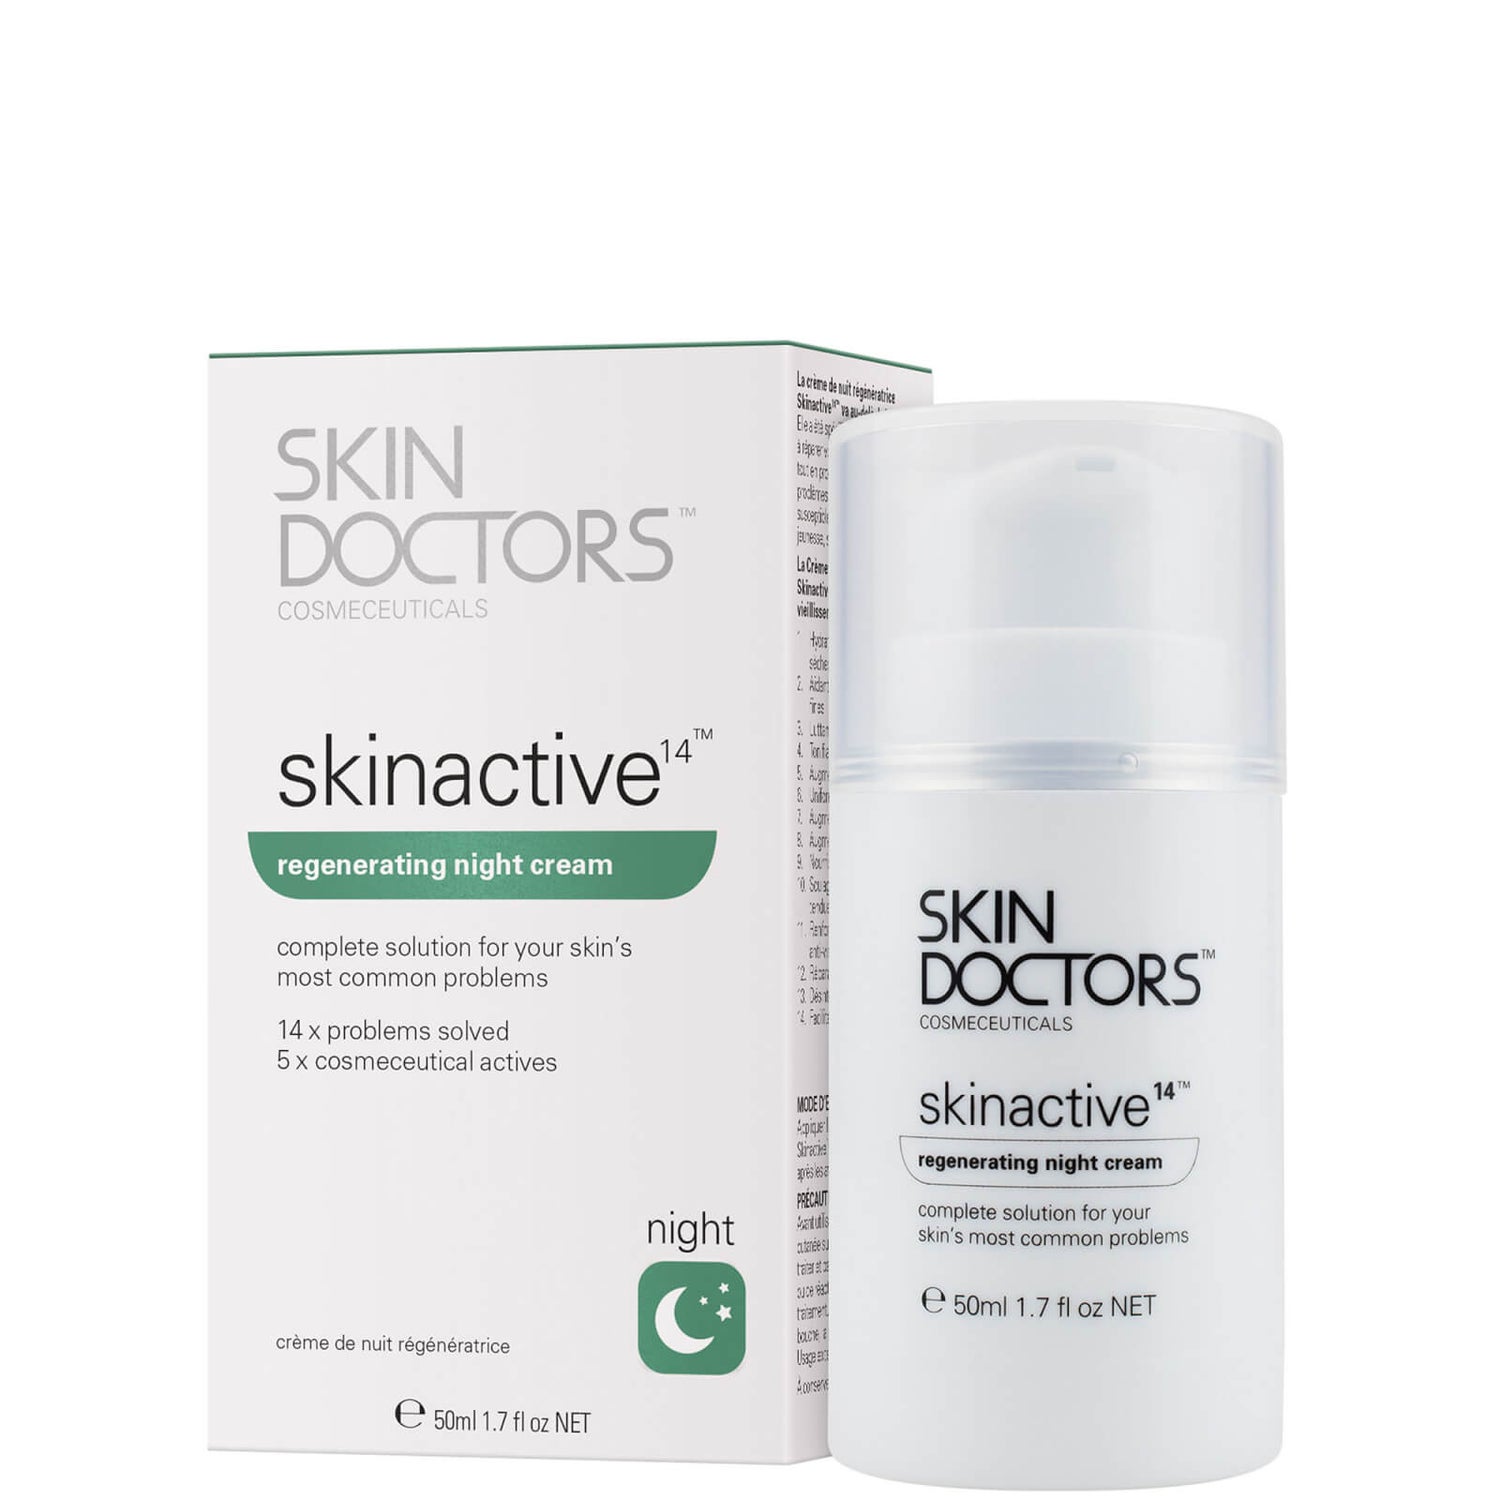 Creme de Noite Regenerador Skinactive 14 da Skin Doctors (50 ml)